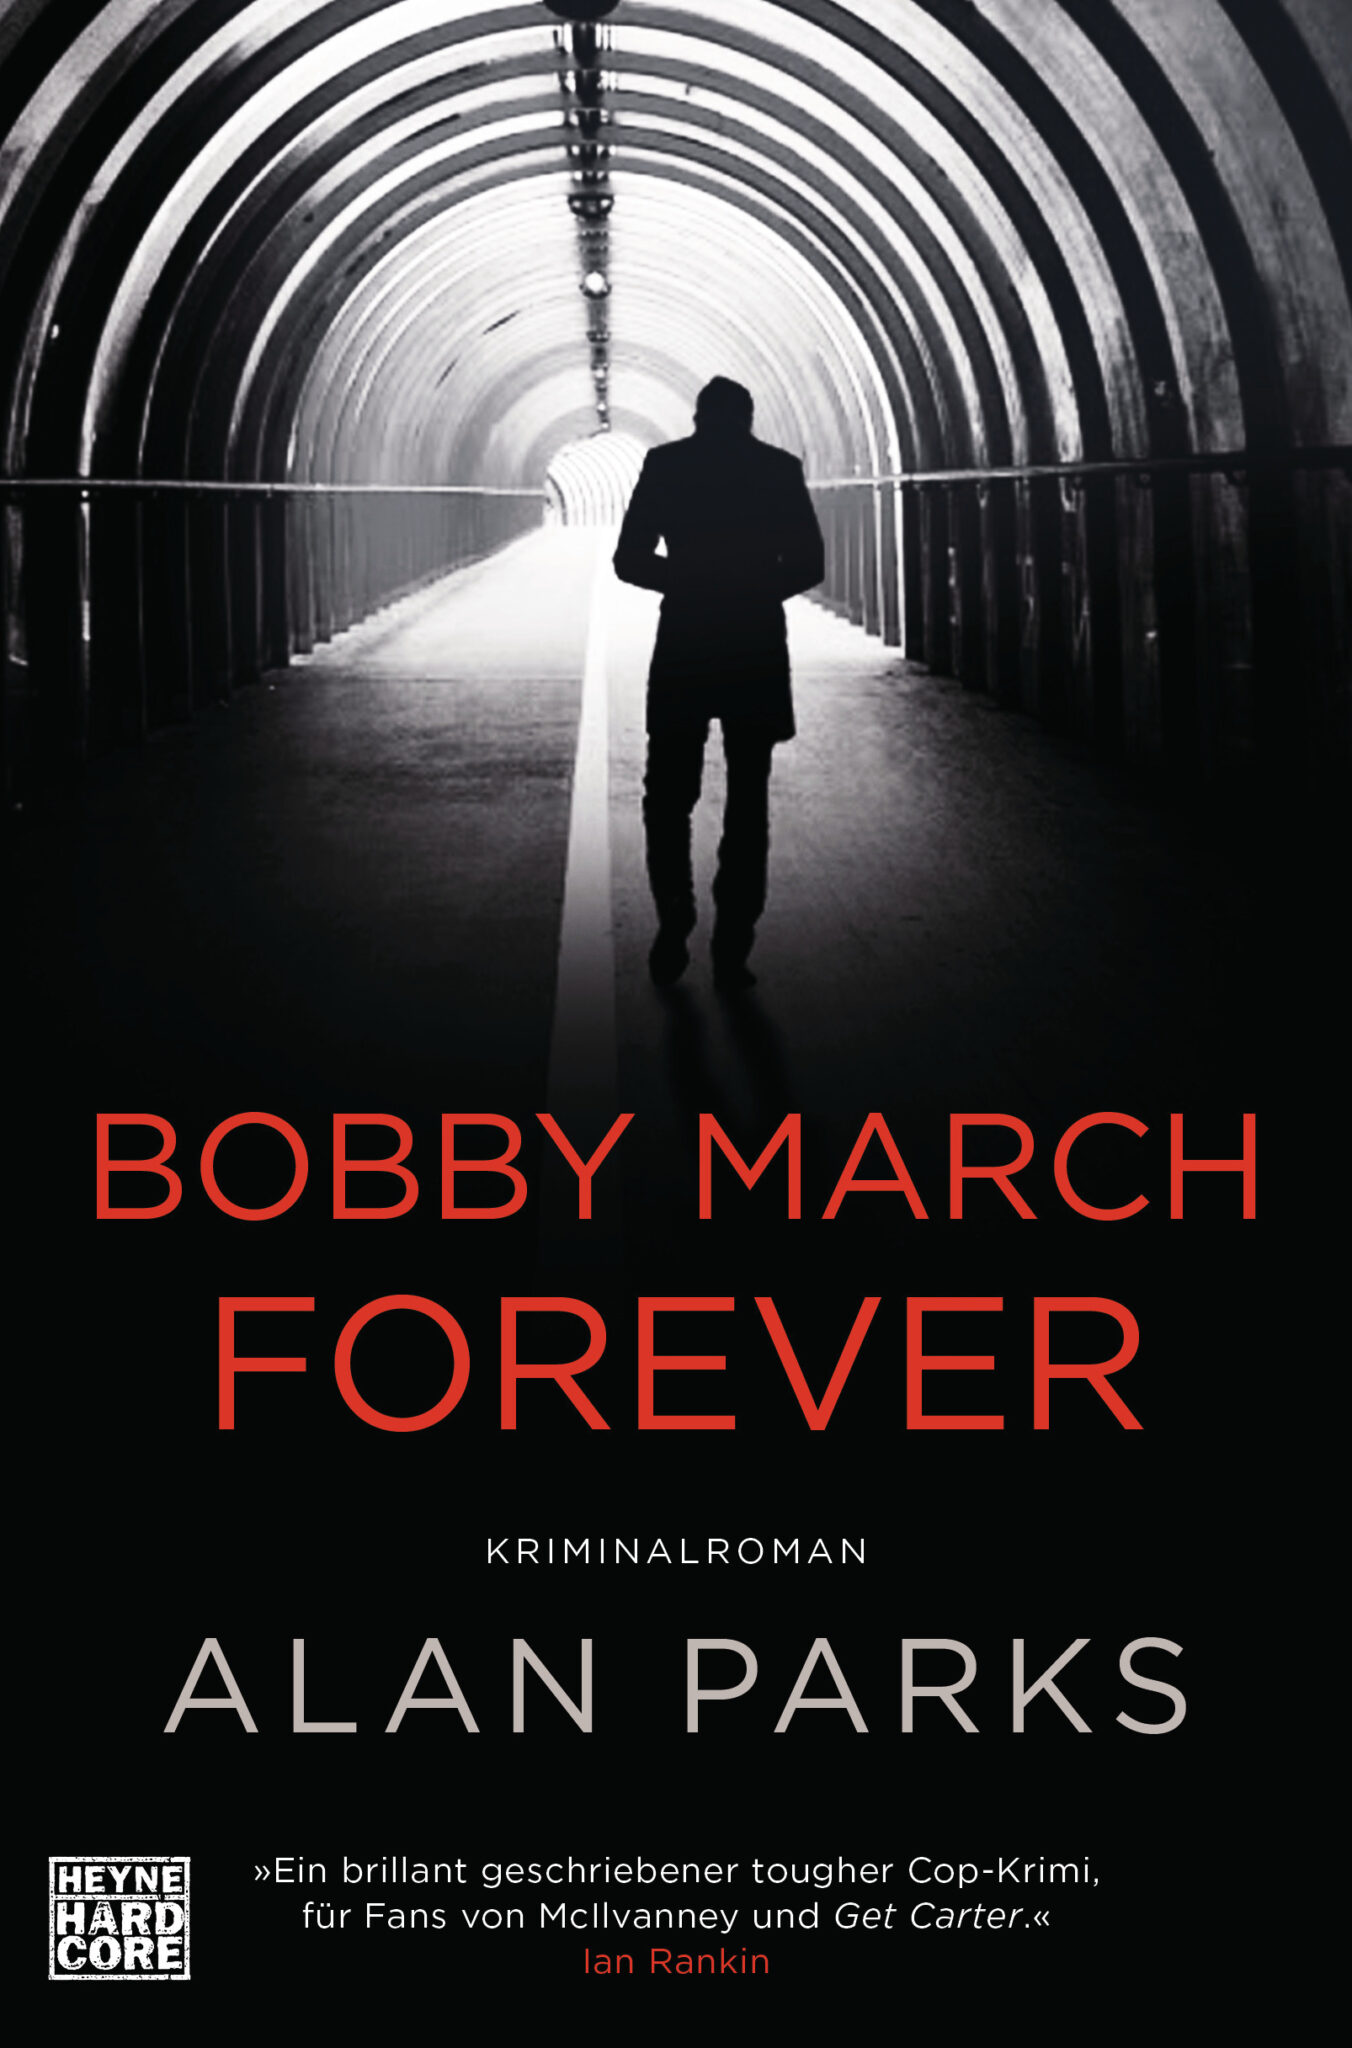 Buchcover „Bobby March forever“ von Alan Parks